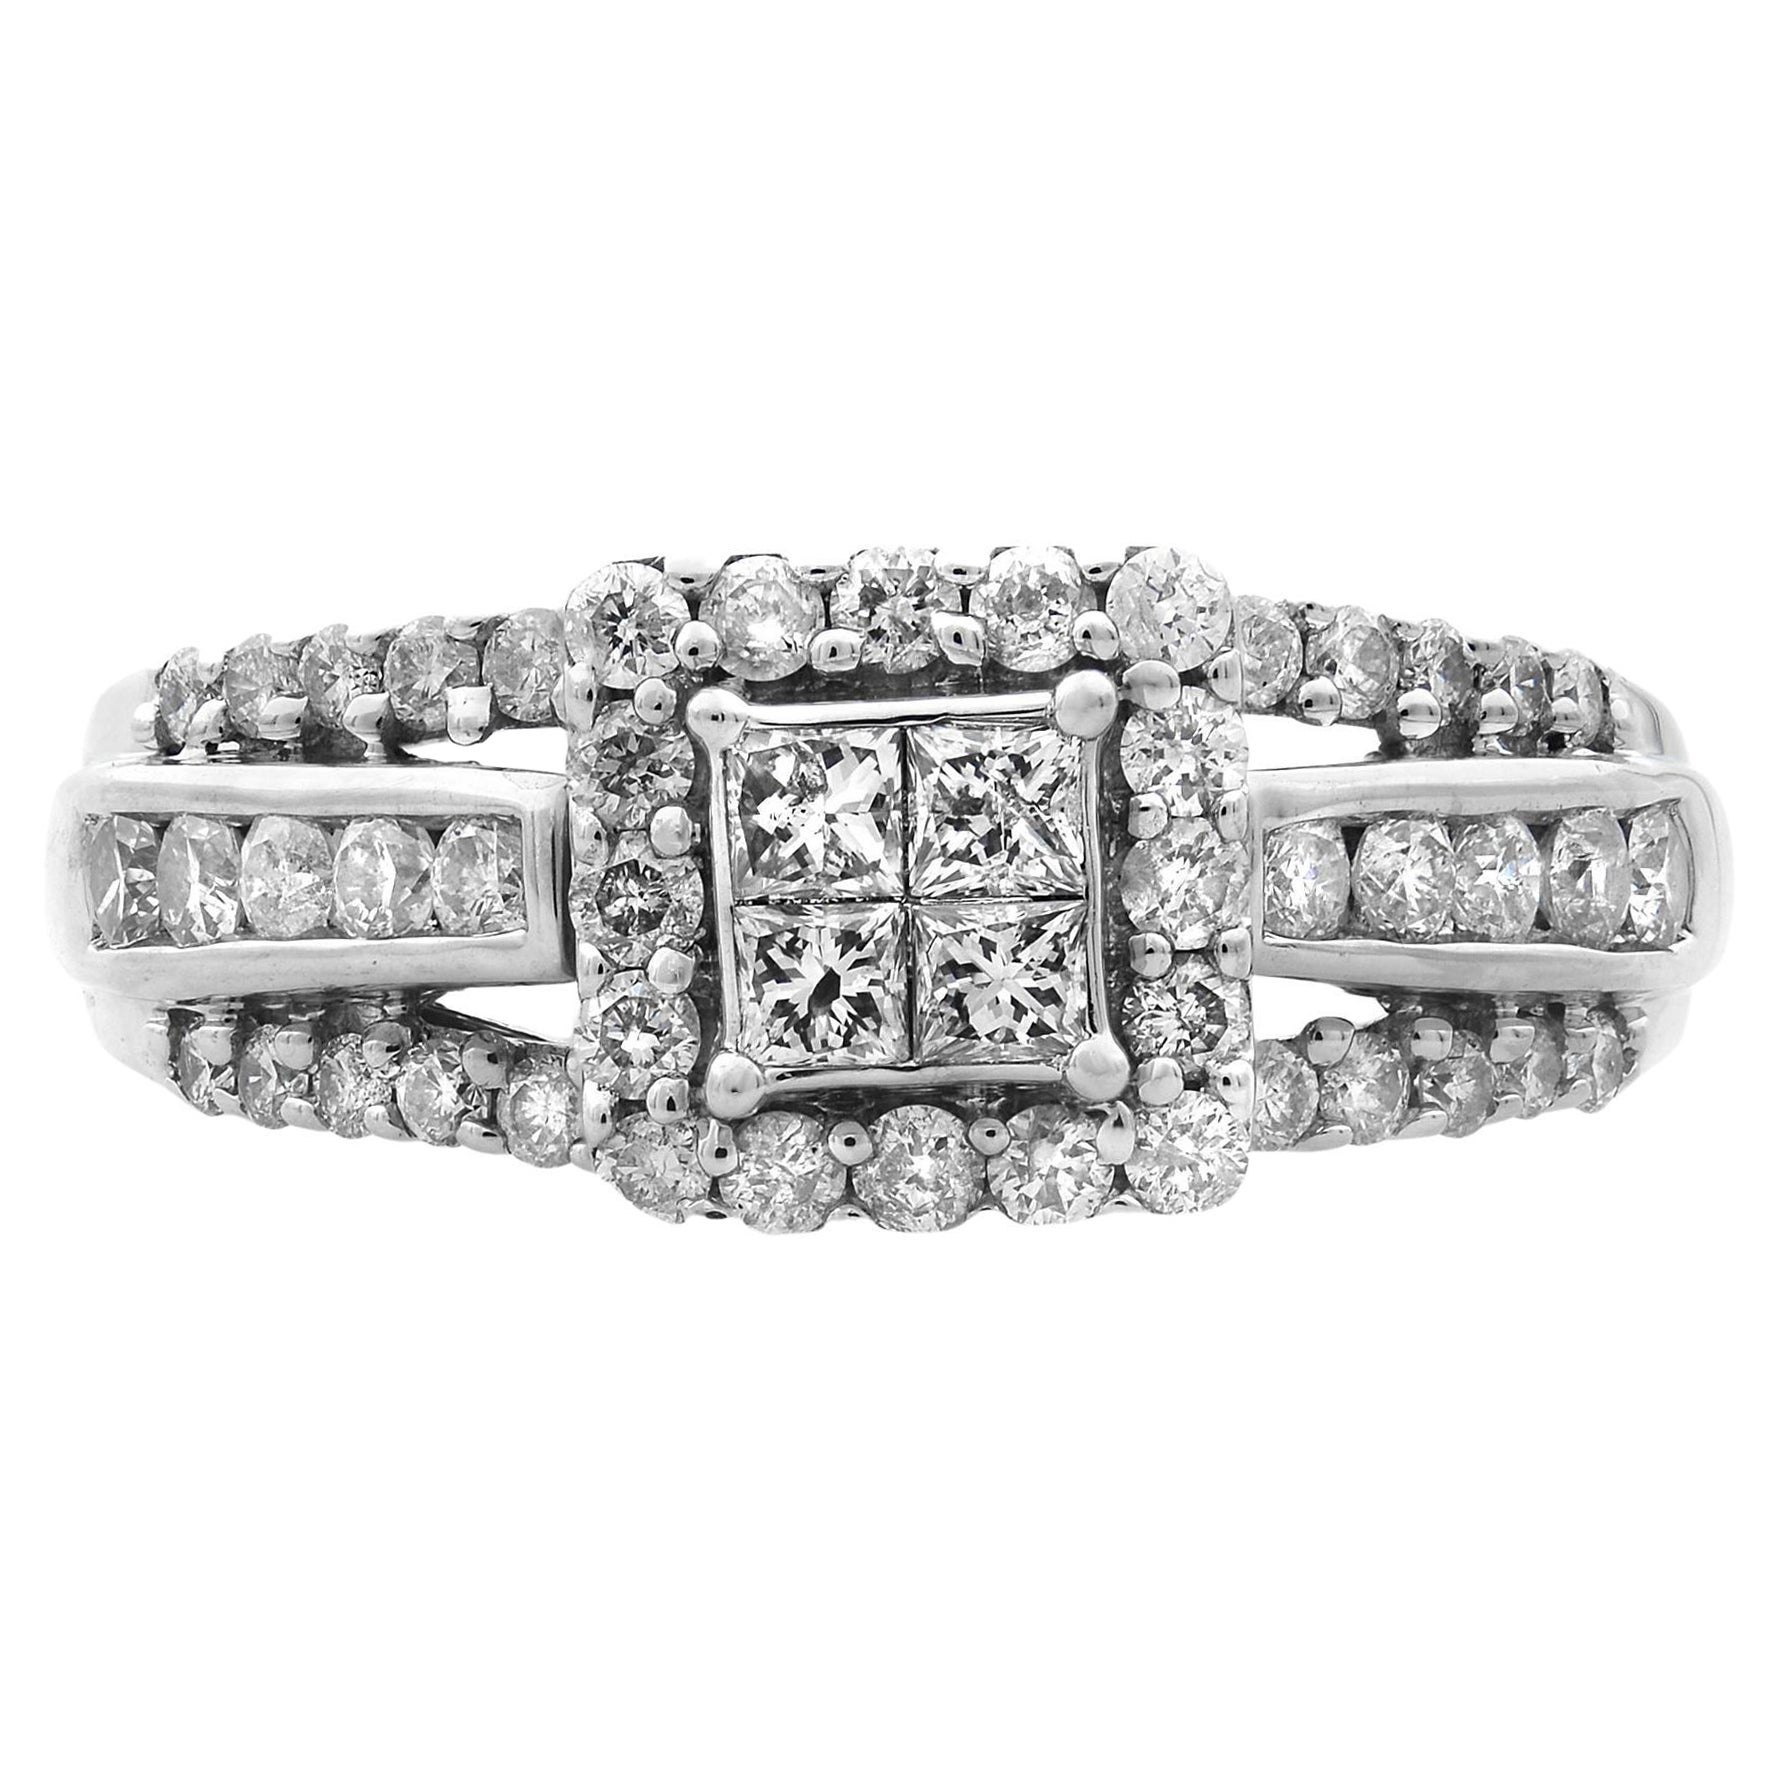 Rachel Koen Diamond Ladies Wedding Ring 14K White Gold 1.25cttw